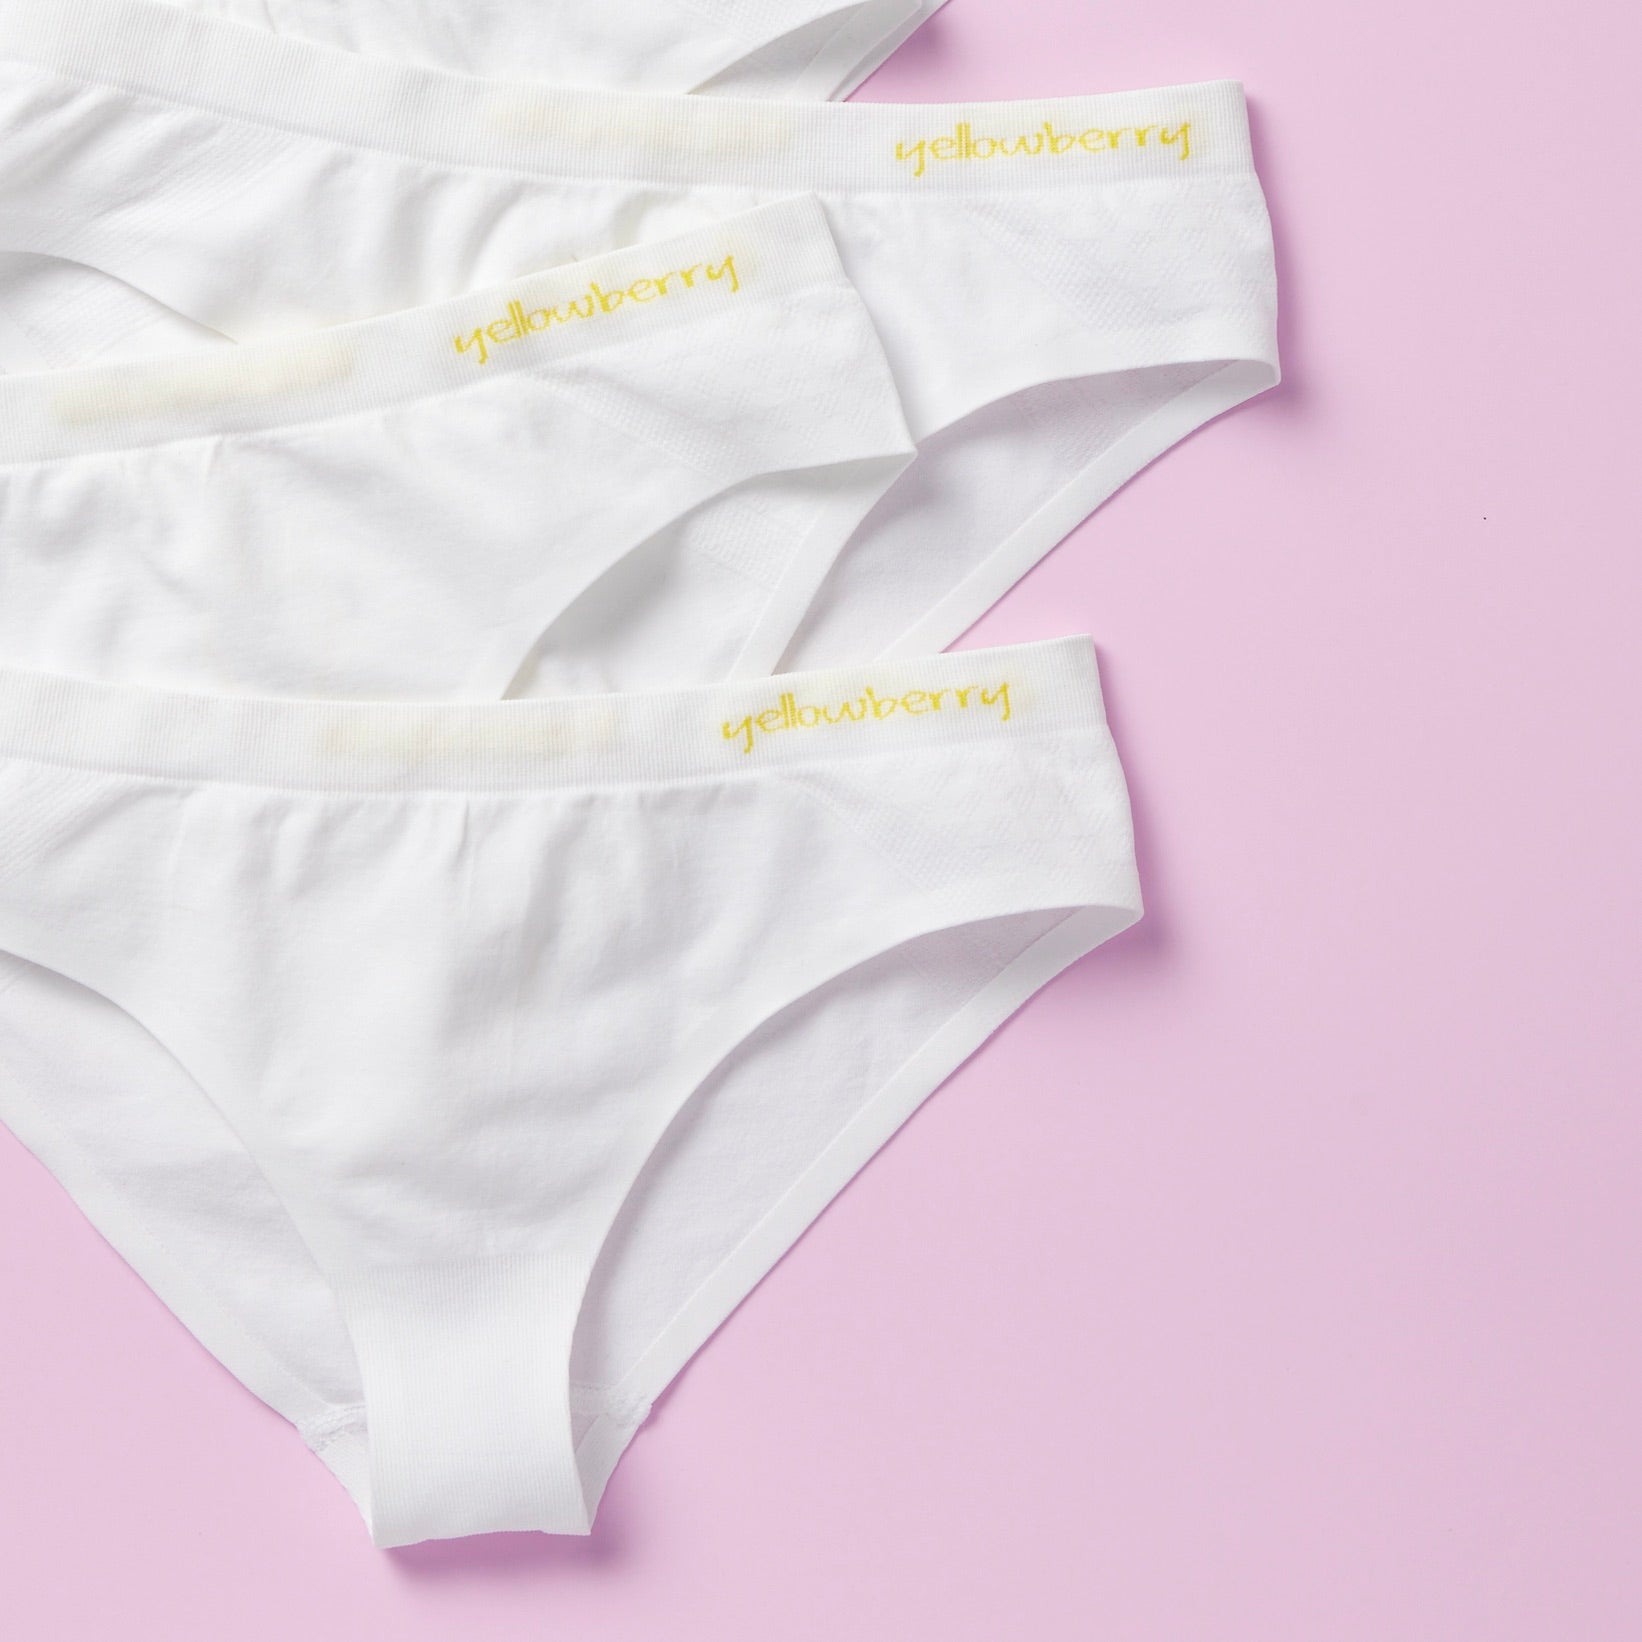 Twistr Seamless Underwear for Girls Bundle of Six - Yellowberry